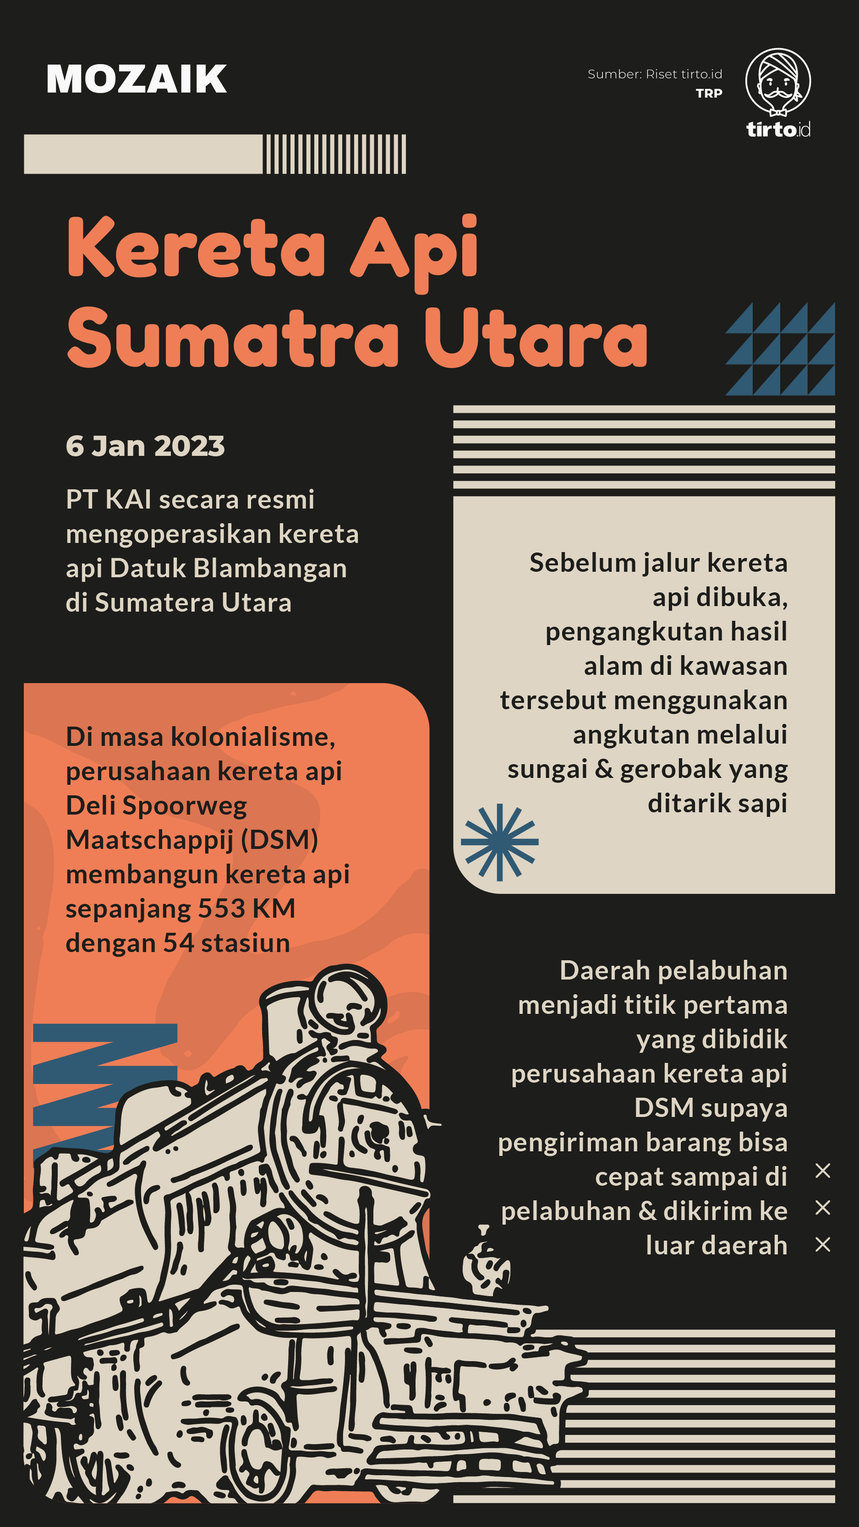 Infografik Mozaik Kereta Api Sumatera Utara